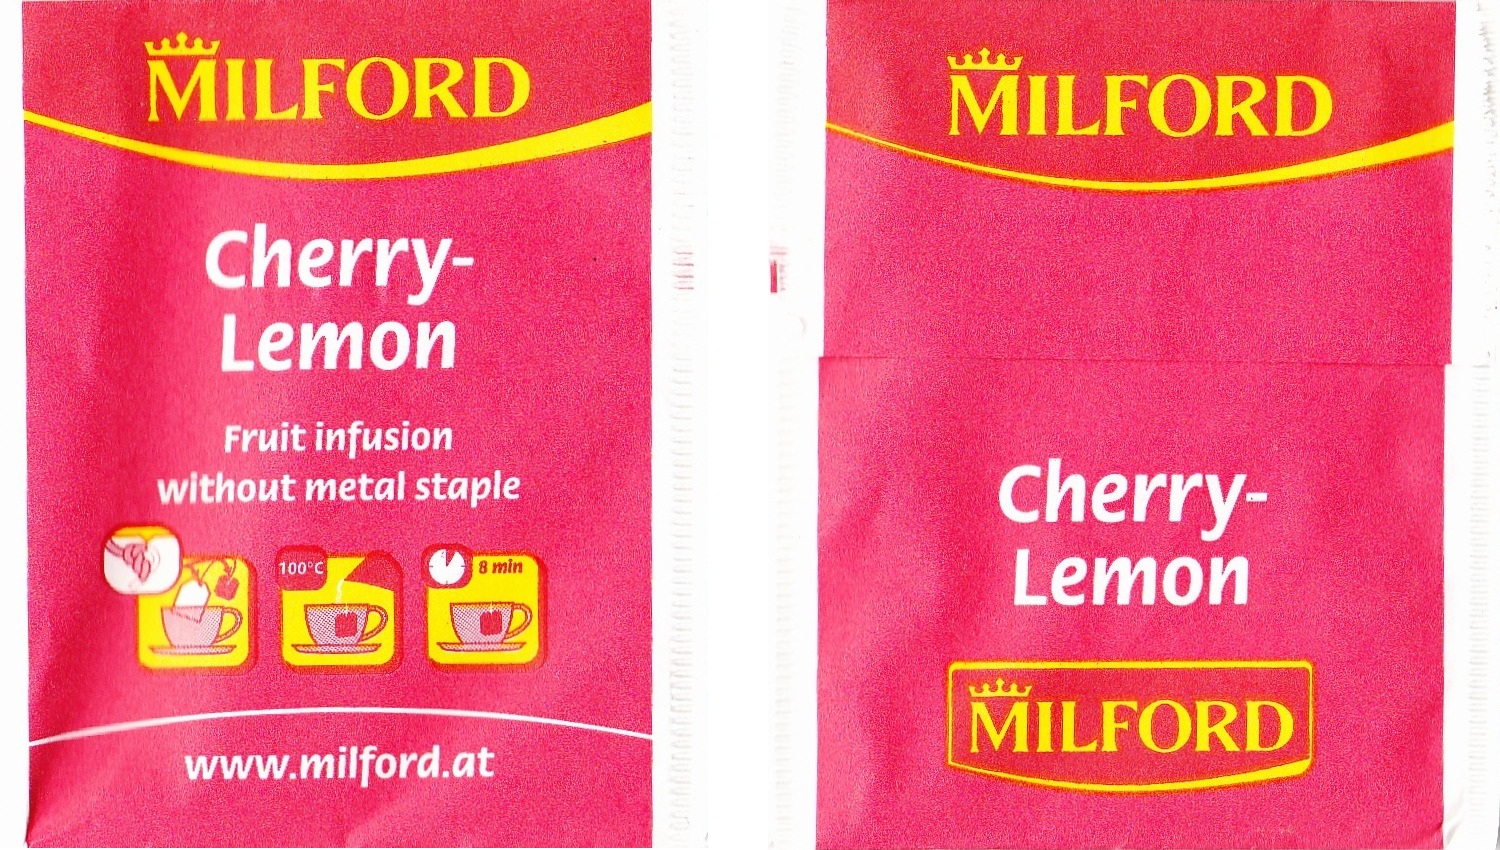 Milford - Cherry, Lemon